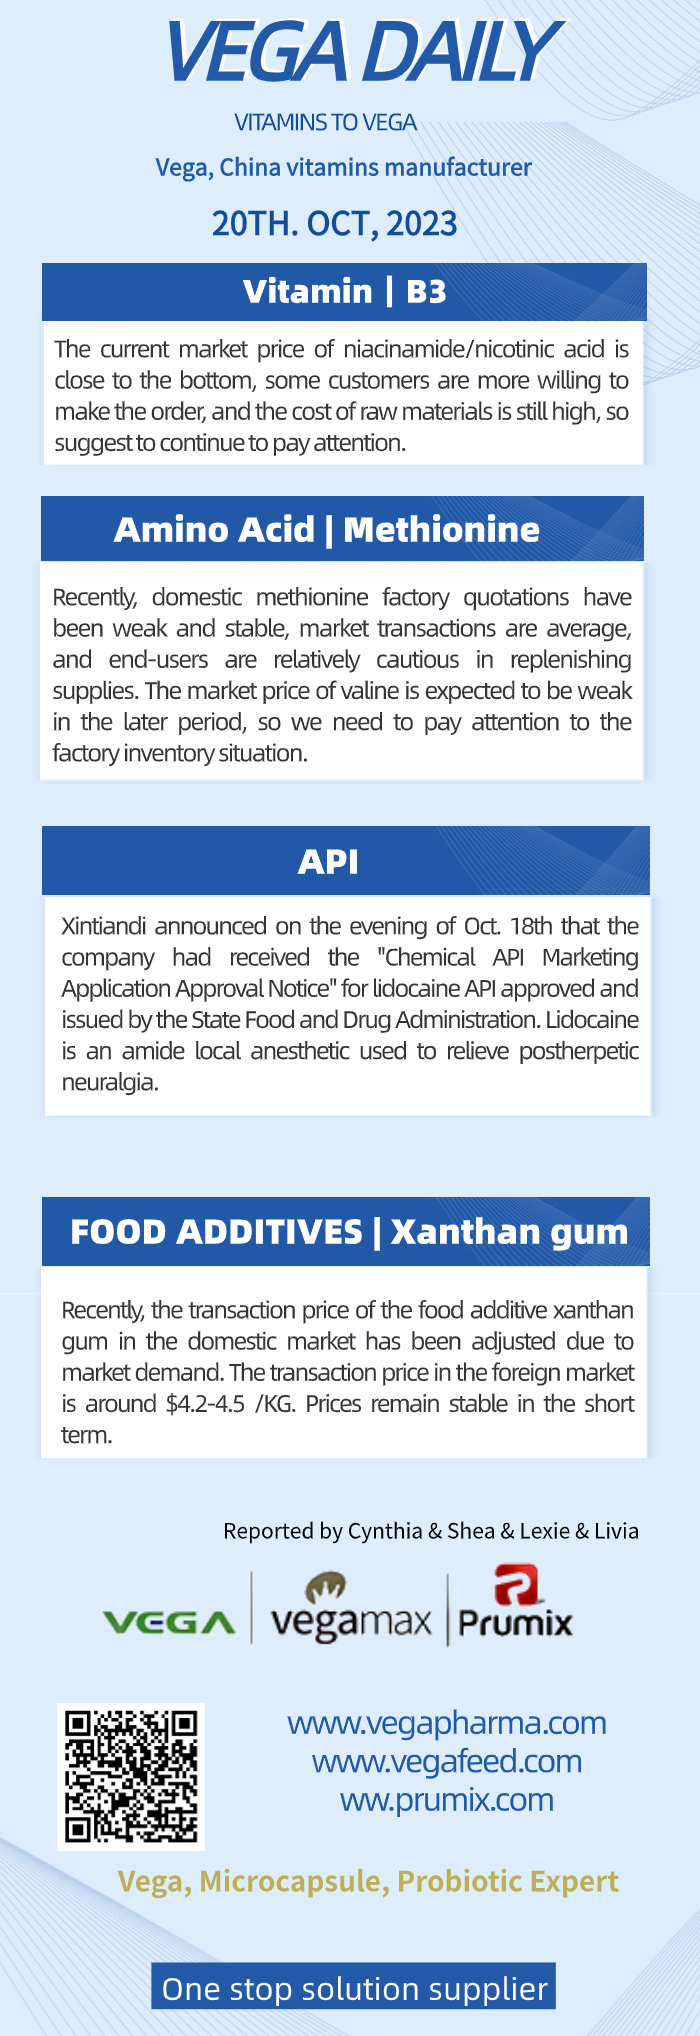 Vega Daily Dated on Oct 20th 2023 Vitamin B3 Methionine API Xanthan gum.png